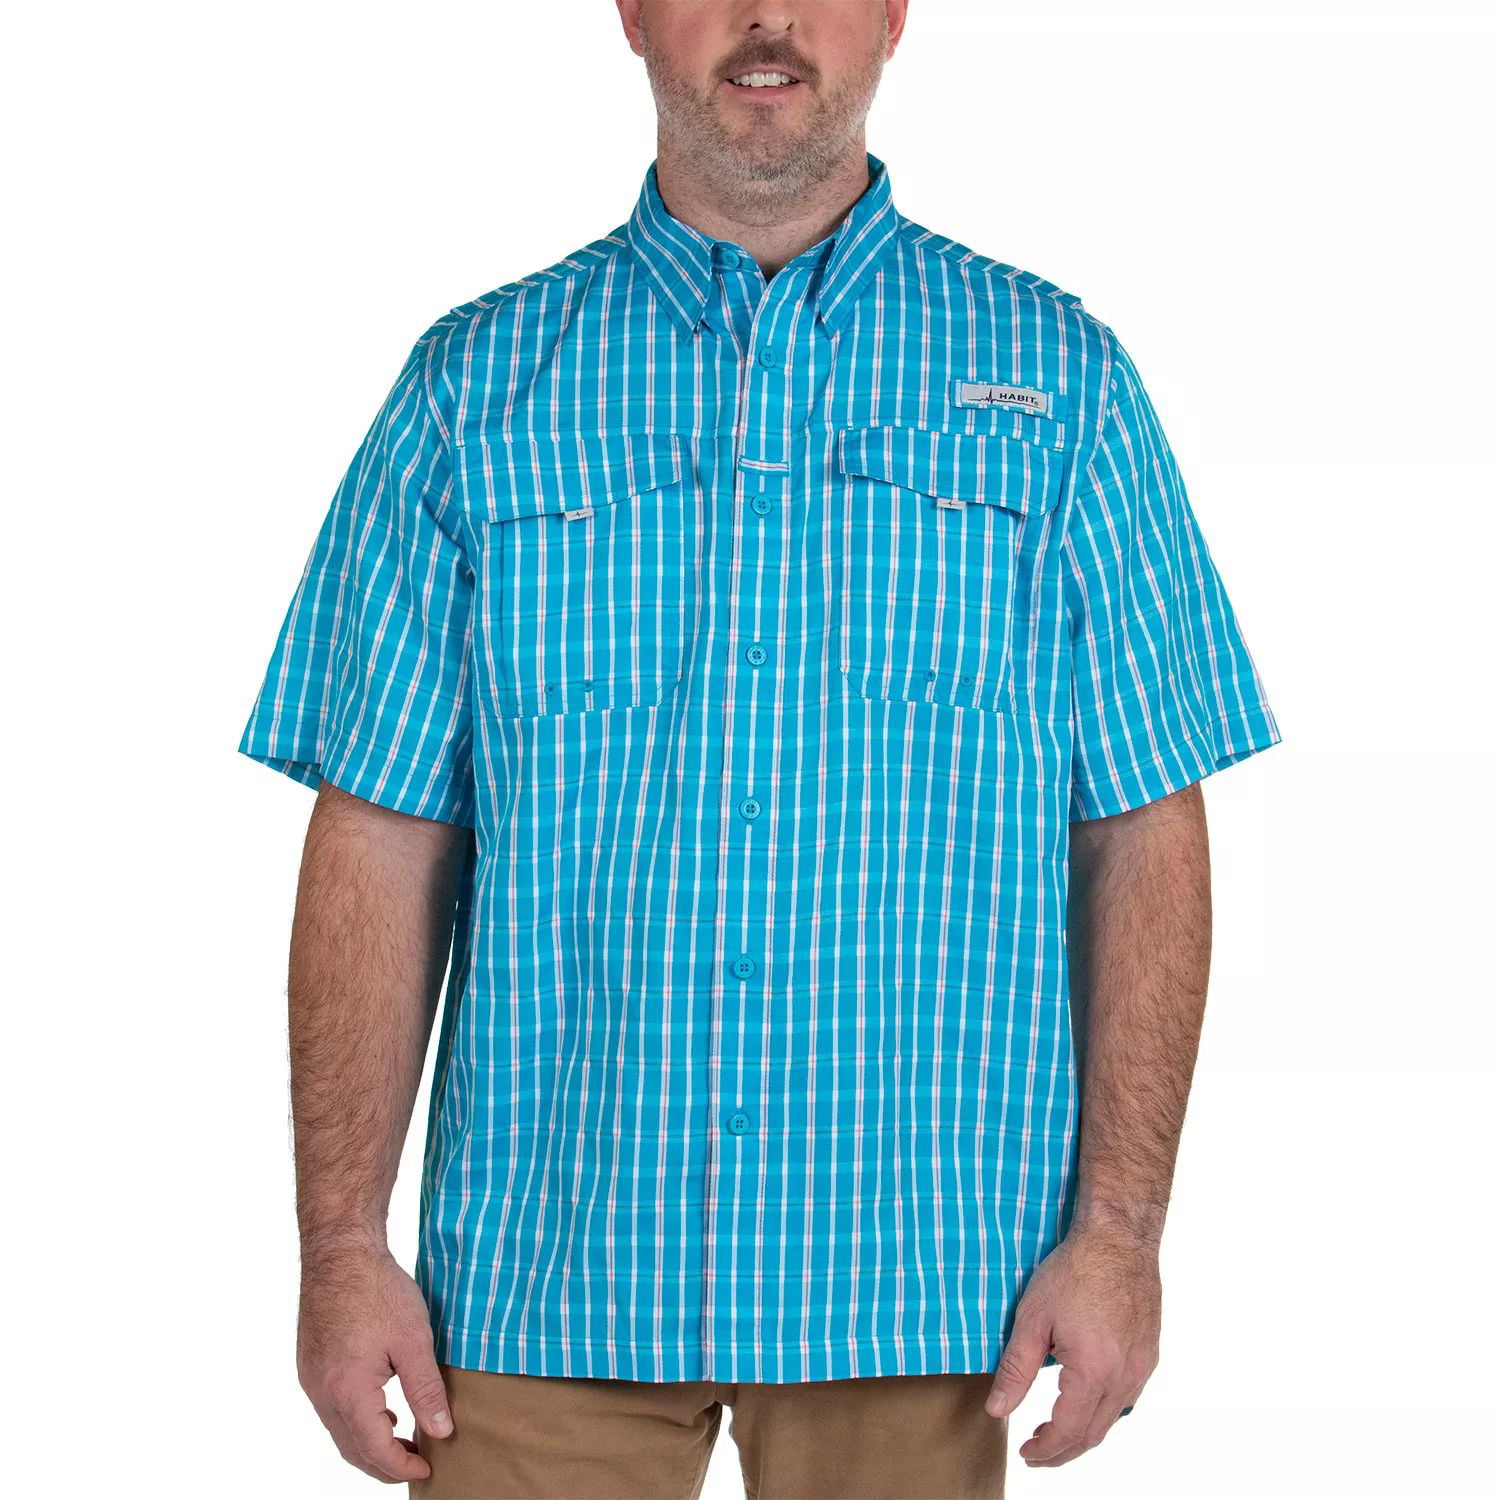 Habit Men's UPF 40+ Crayfish Creek Long Sleeve River Shirt (Alloy, XL)